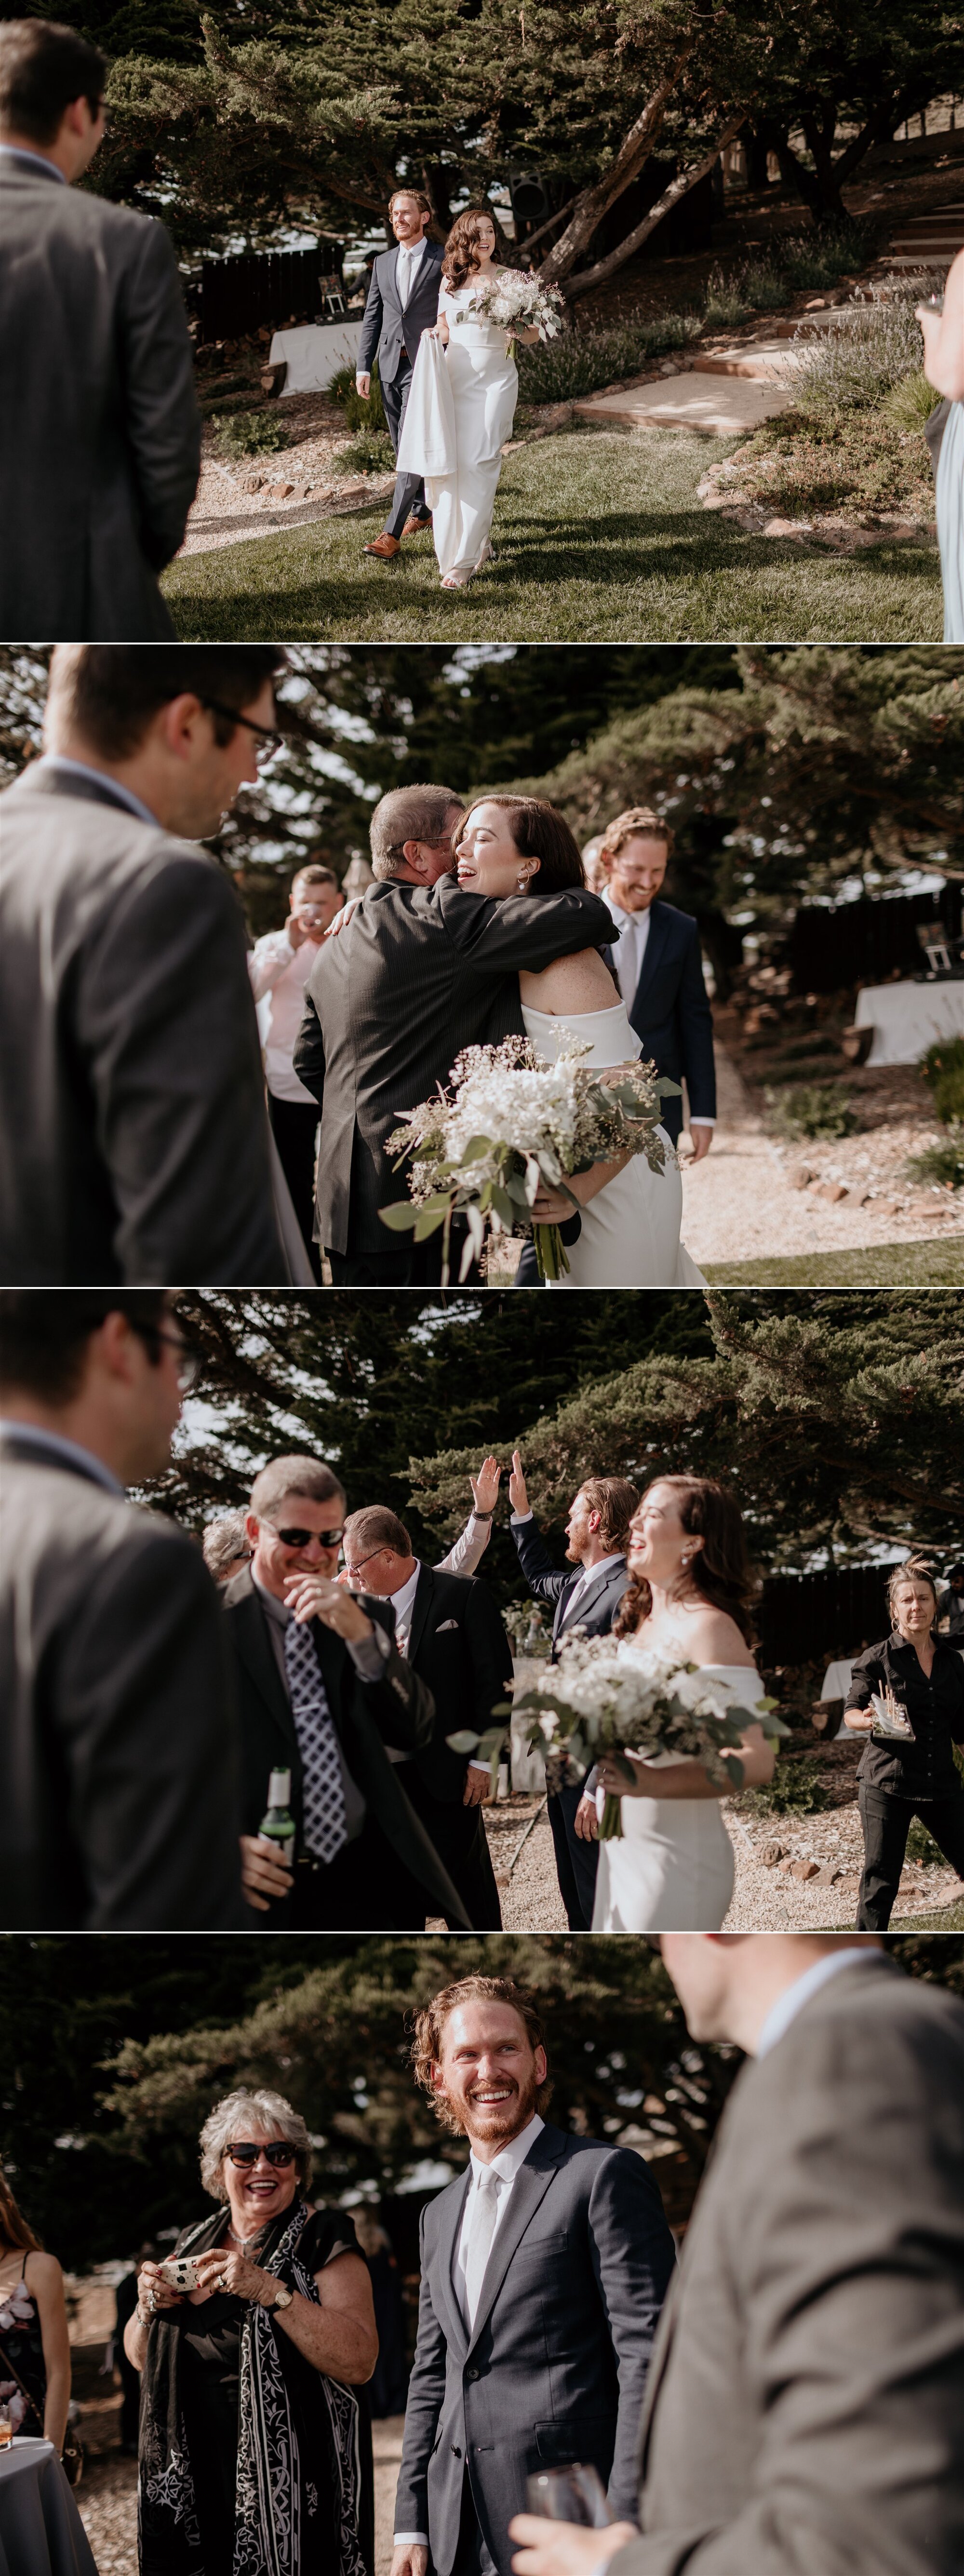 Gretchen Gause Photography // Big Sur Intimate Wedding #bigsurwedding #bigsurweddingphotography #bigsurbride #bigsurintimatewedding